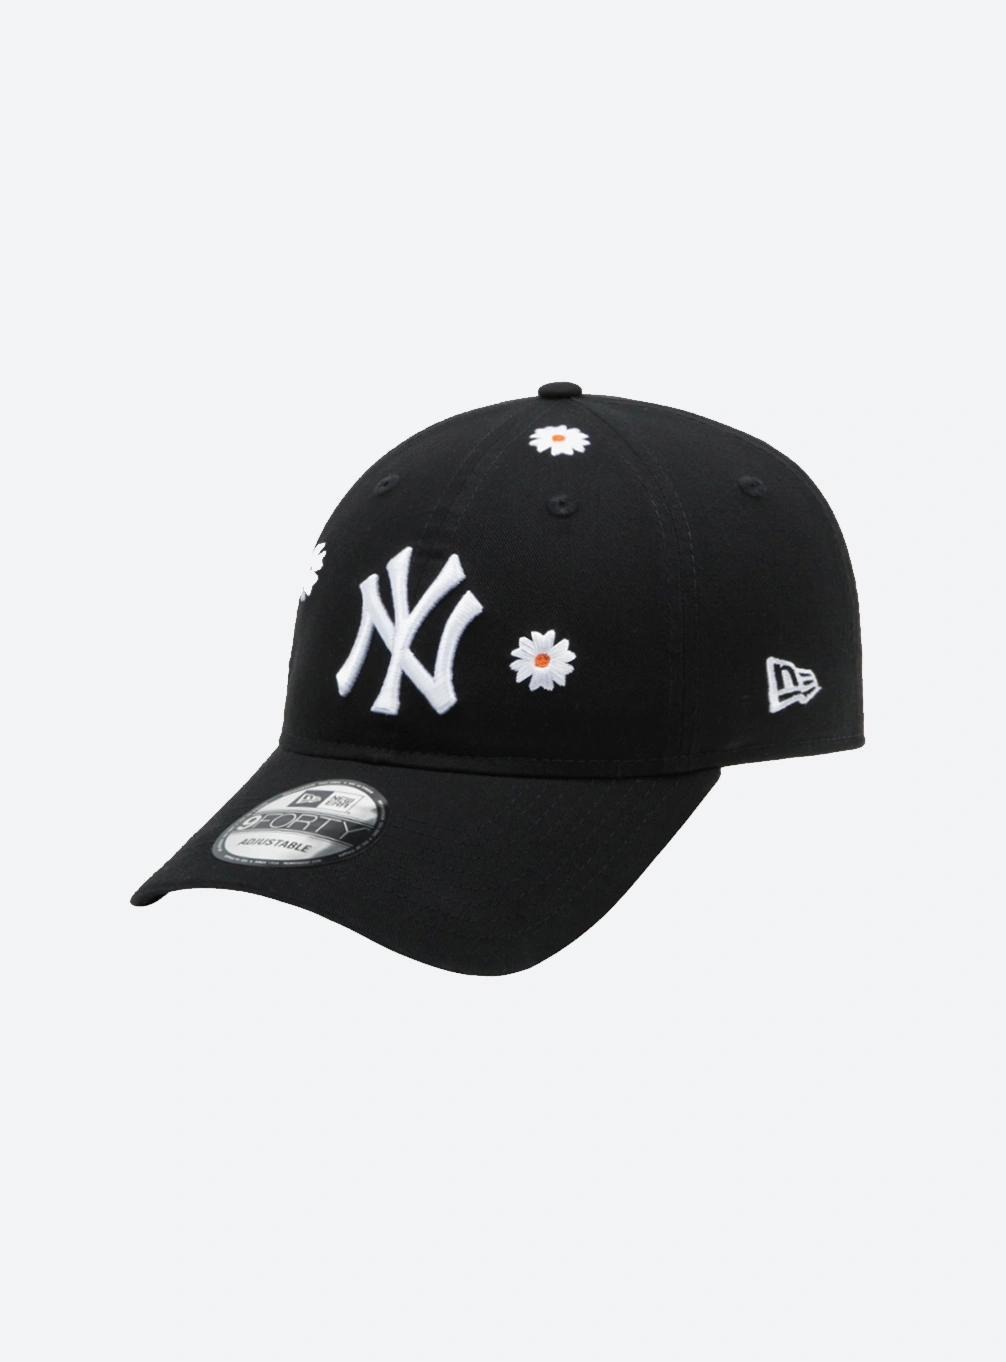 Kith & New Era for New York Yankees Knit Beanie - Light Heather Grey